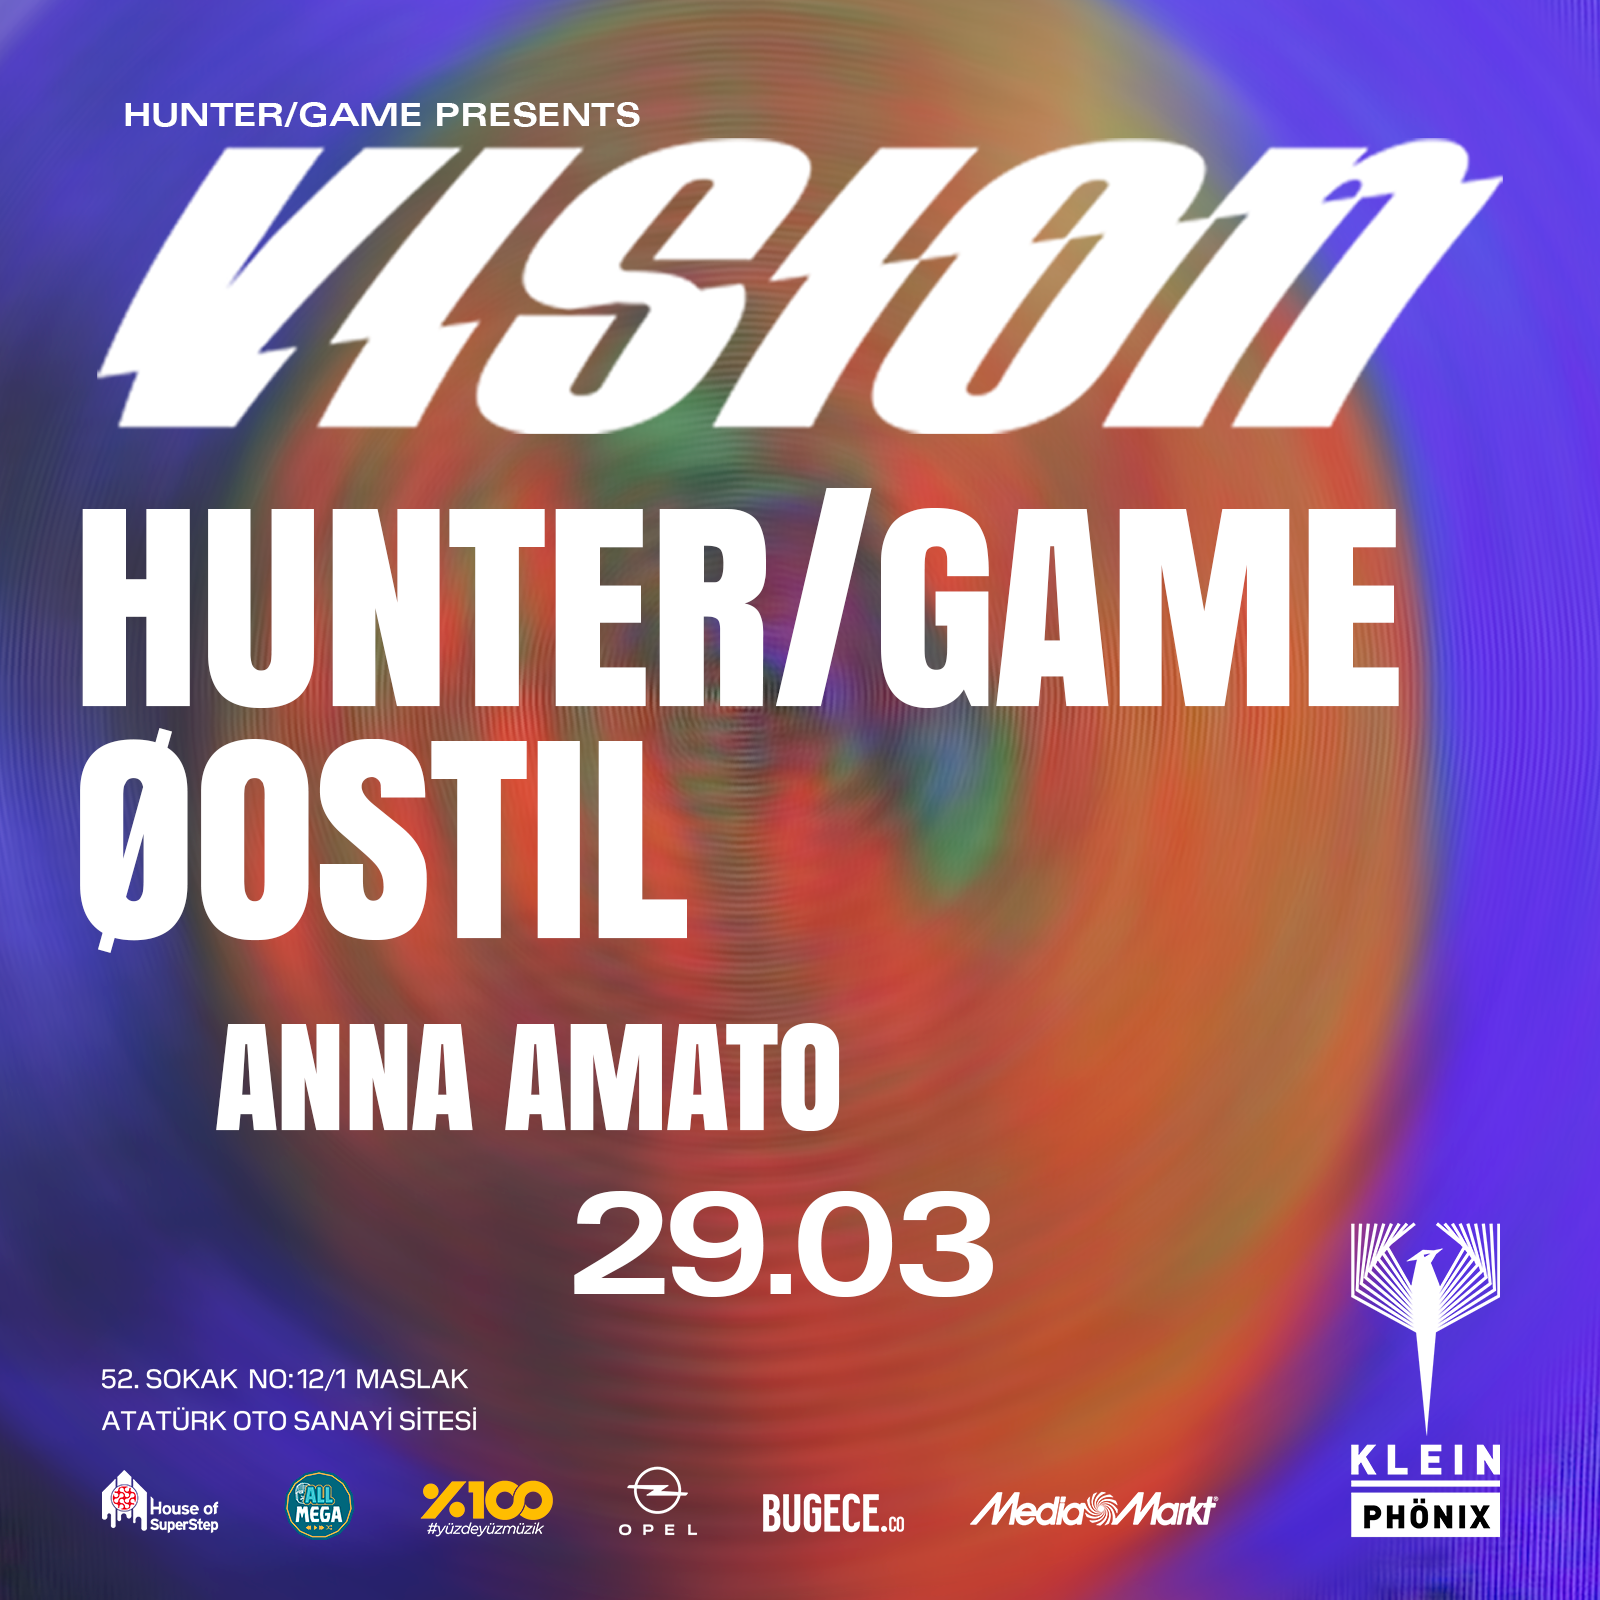 Hunter/Game + OØSTIL + ANNA AMATO + FRATELLO // HUNTER GAME PRESENTS: VISION - フライヤー表